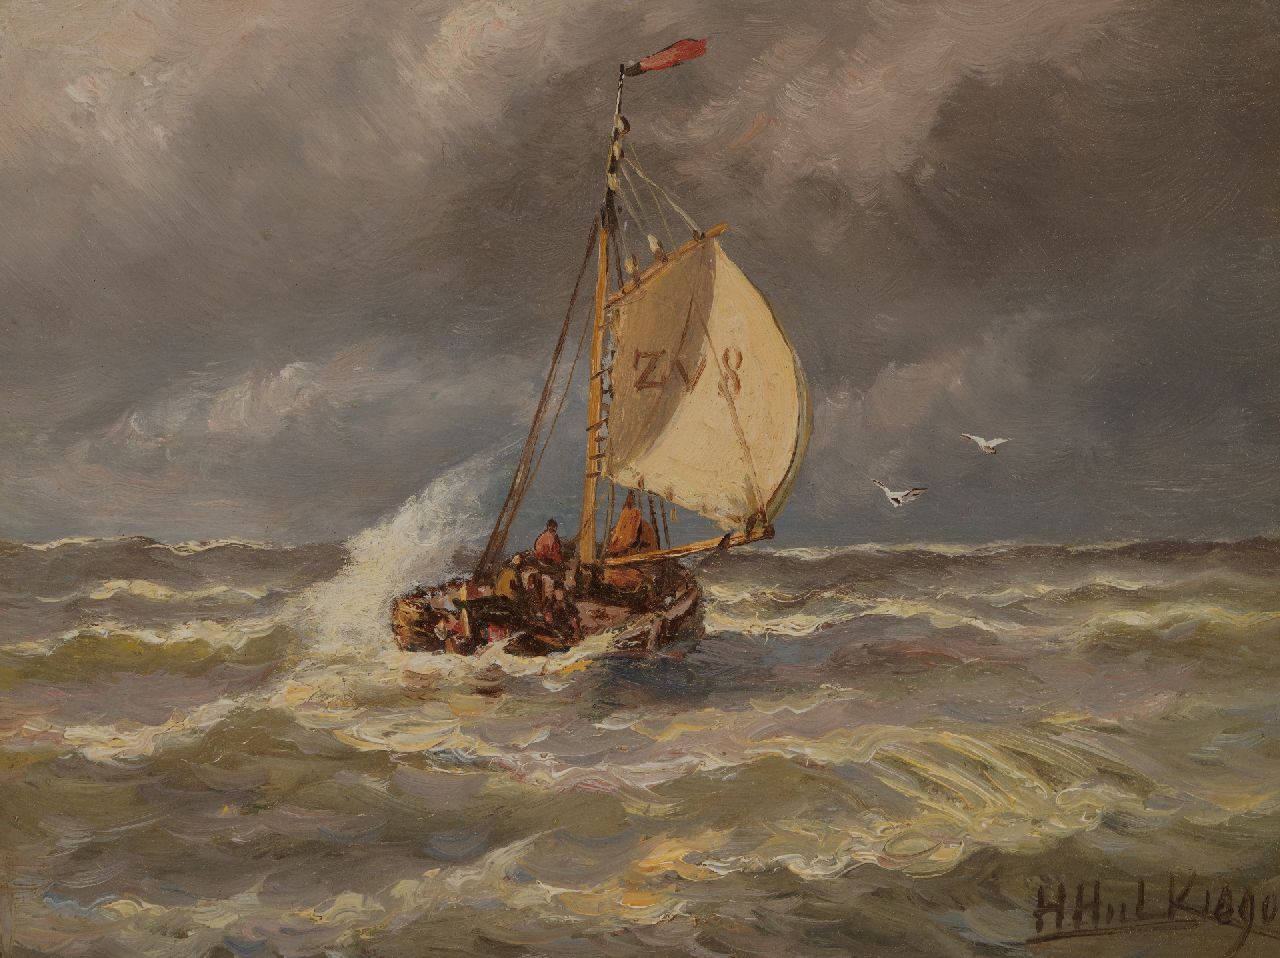 Hulk H.  | Hendrik Hulk, Sailing ship on rough sea, oil on panel 16.3 x 21.3 cm, signed l.r. and dated 1890